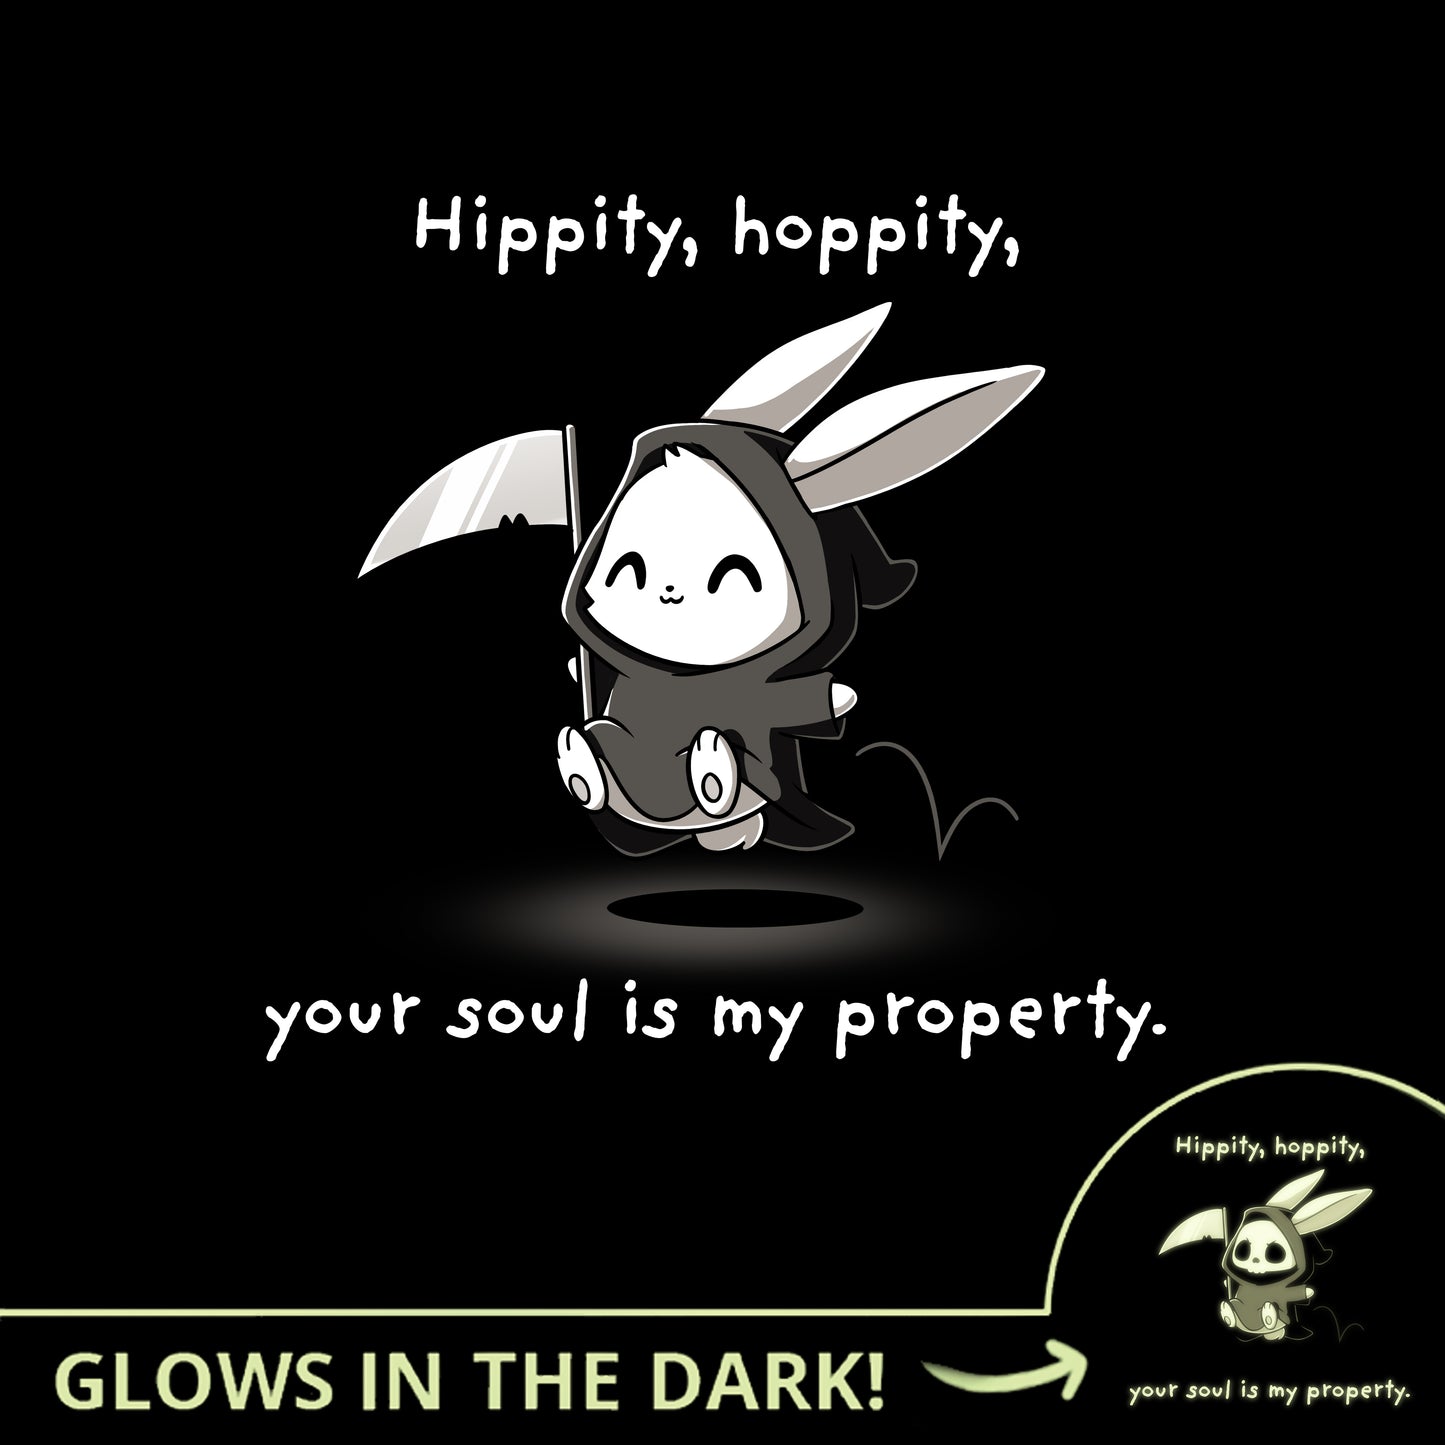 Hippity Hoppity Your Soul is My Property (Glow) by TeeTurtle glows in the dark.